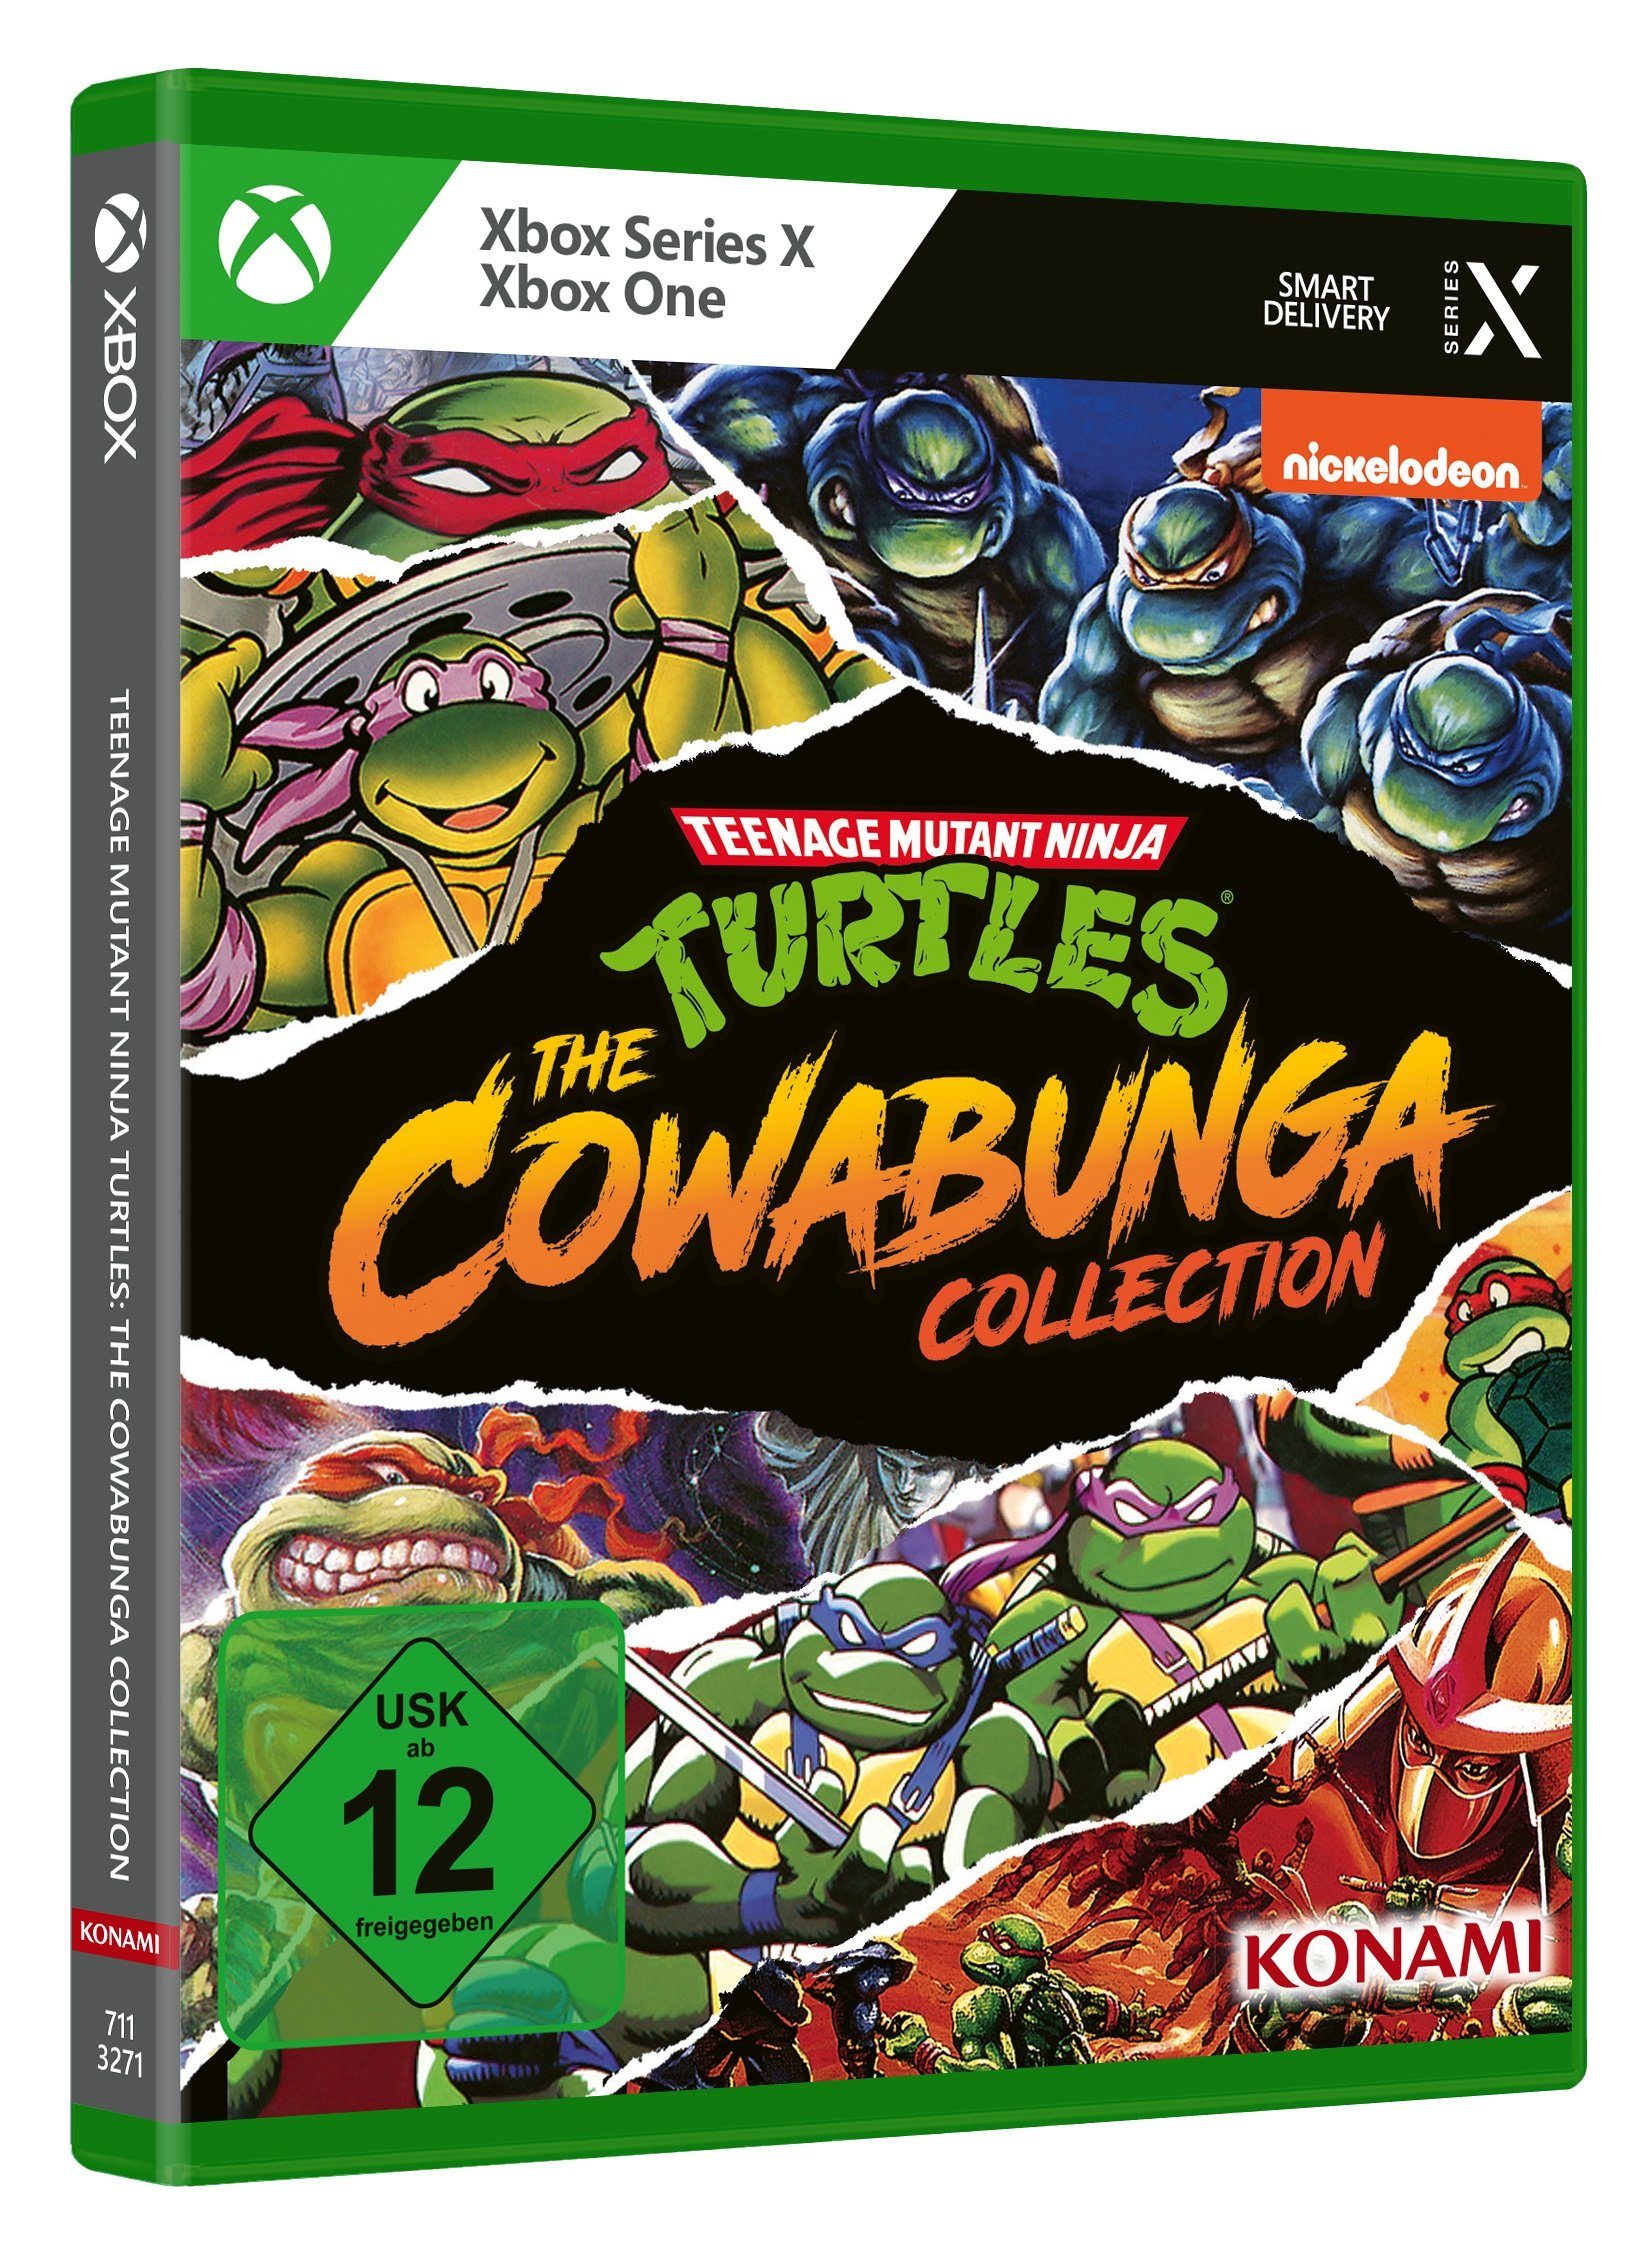 Konami Teenage Mutant X One, - Cowabunga Xbox Ninja The Xbox Collection Series Turtles